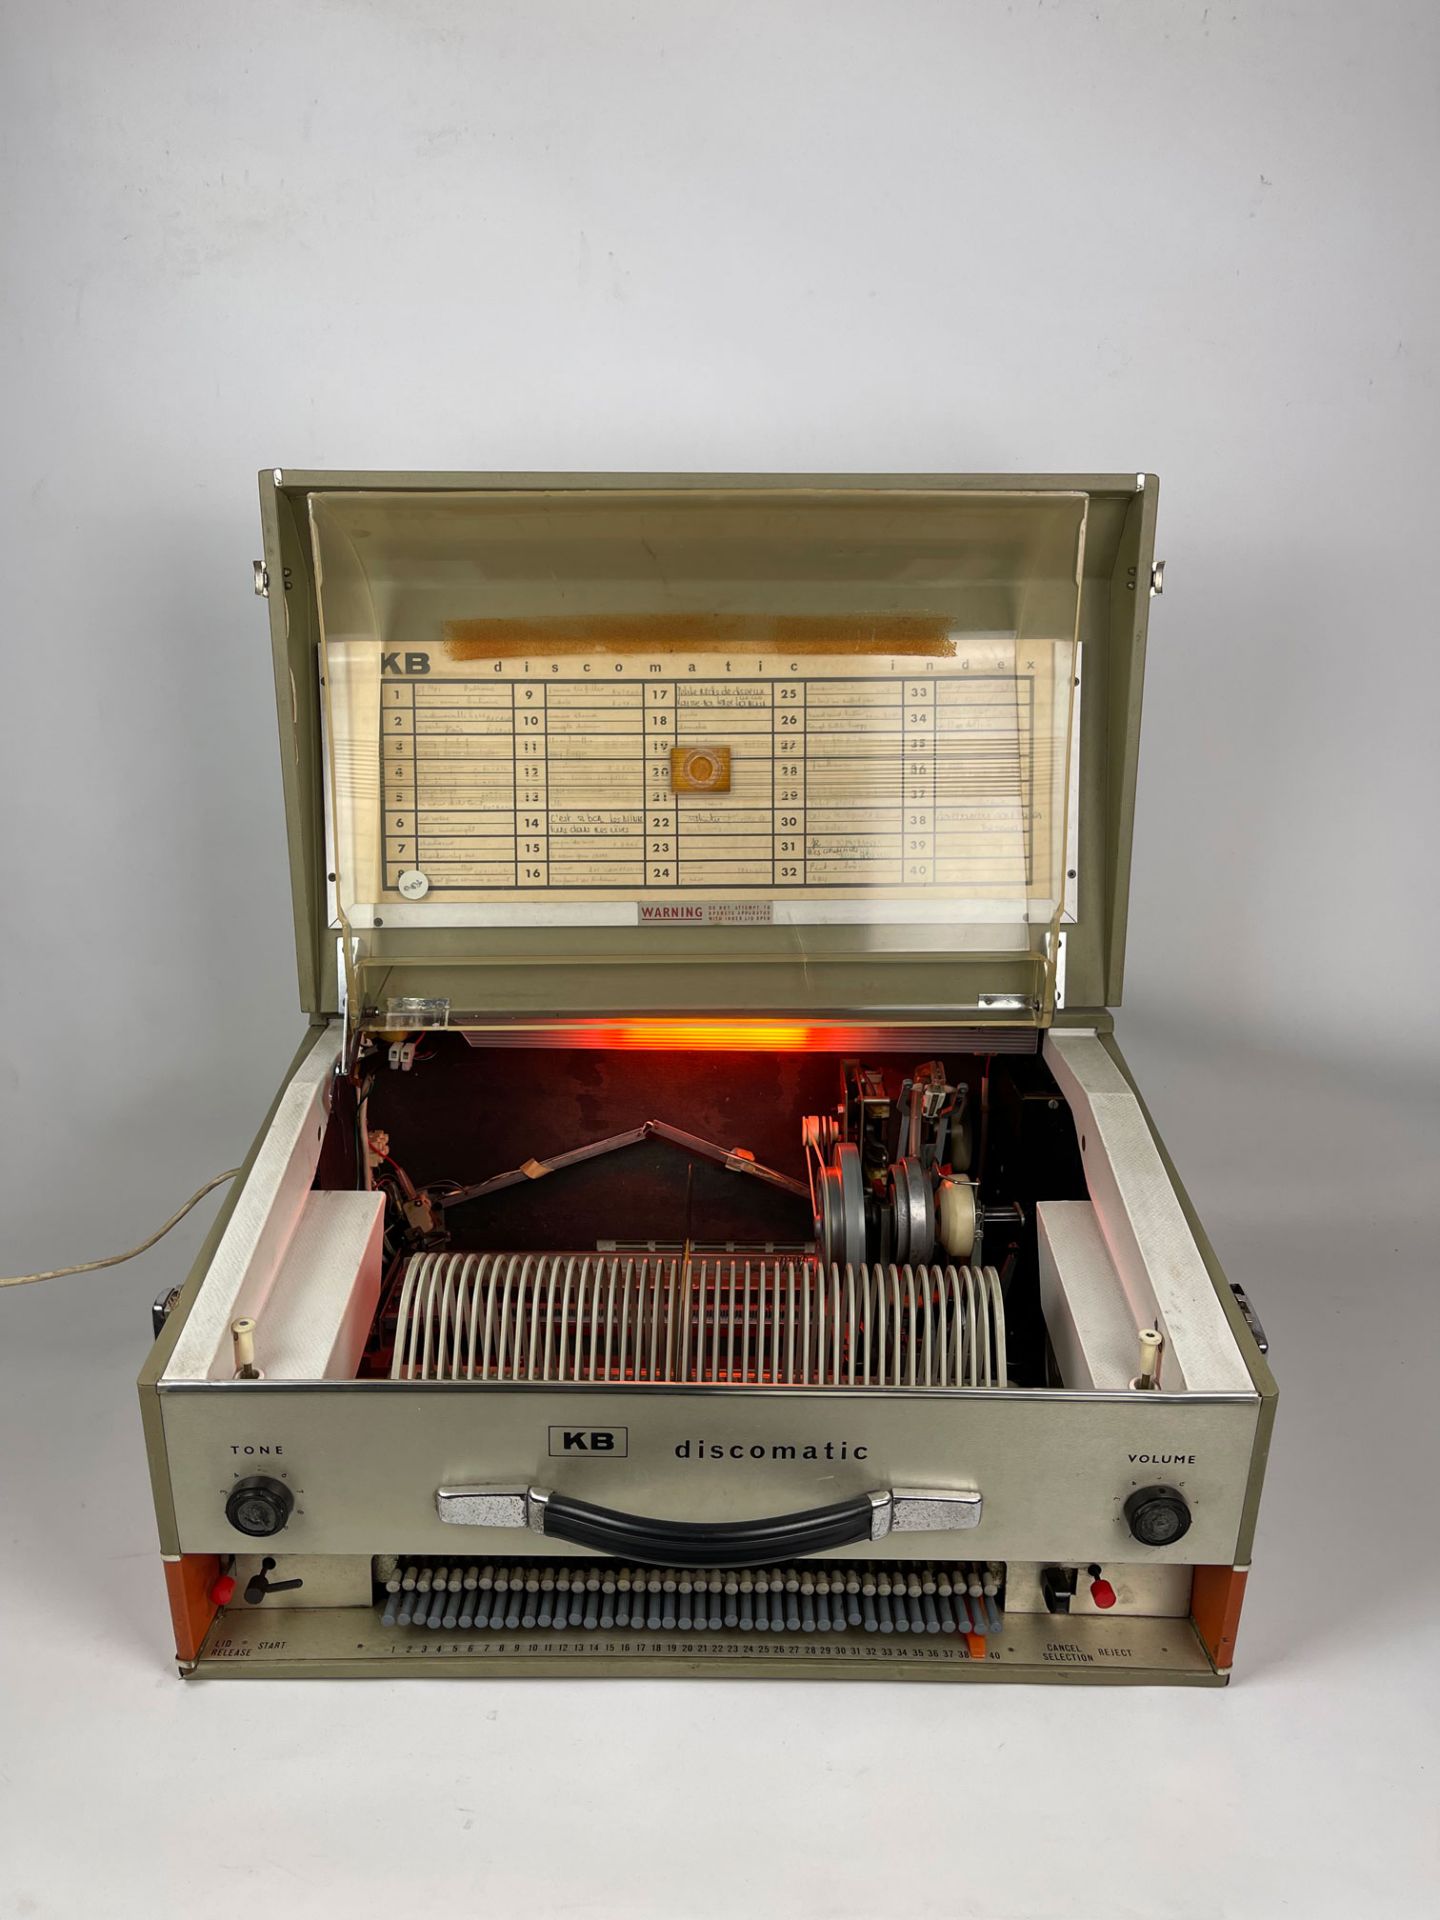 1965 Kolster-Brandes KB Discomatic Portable Jukebox - Image 3 of 11